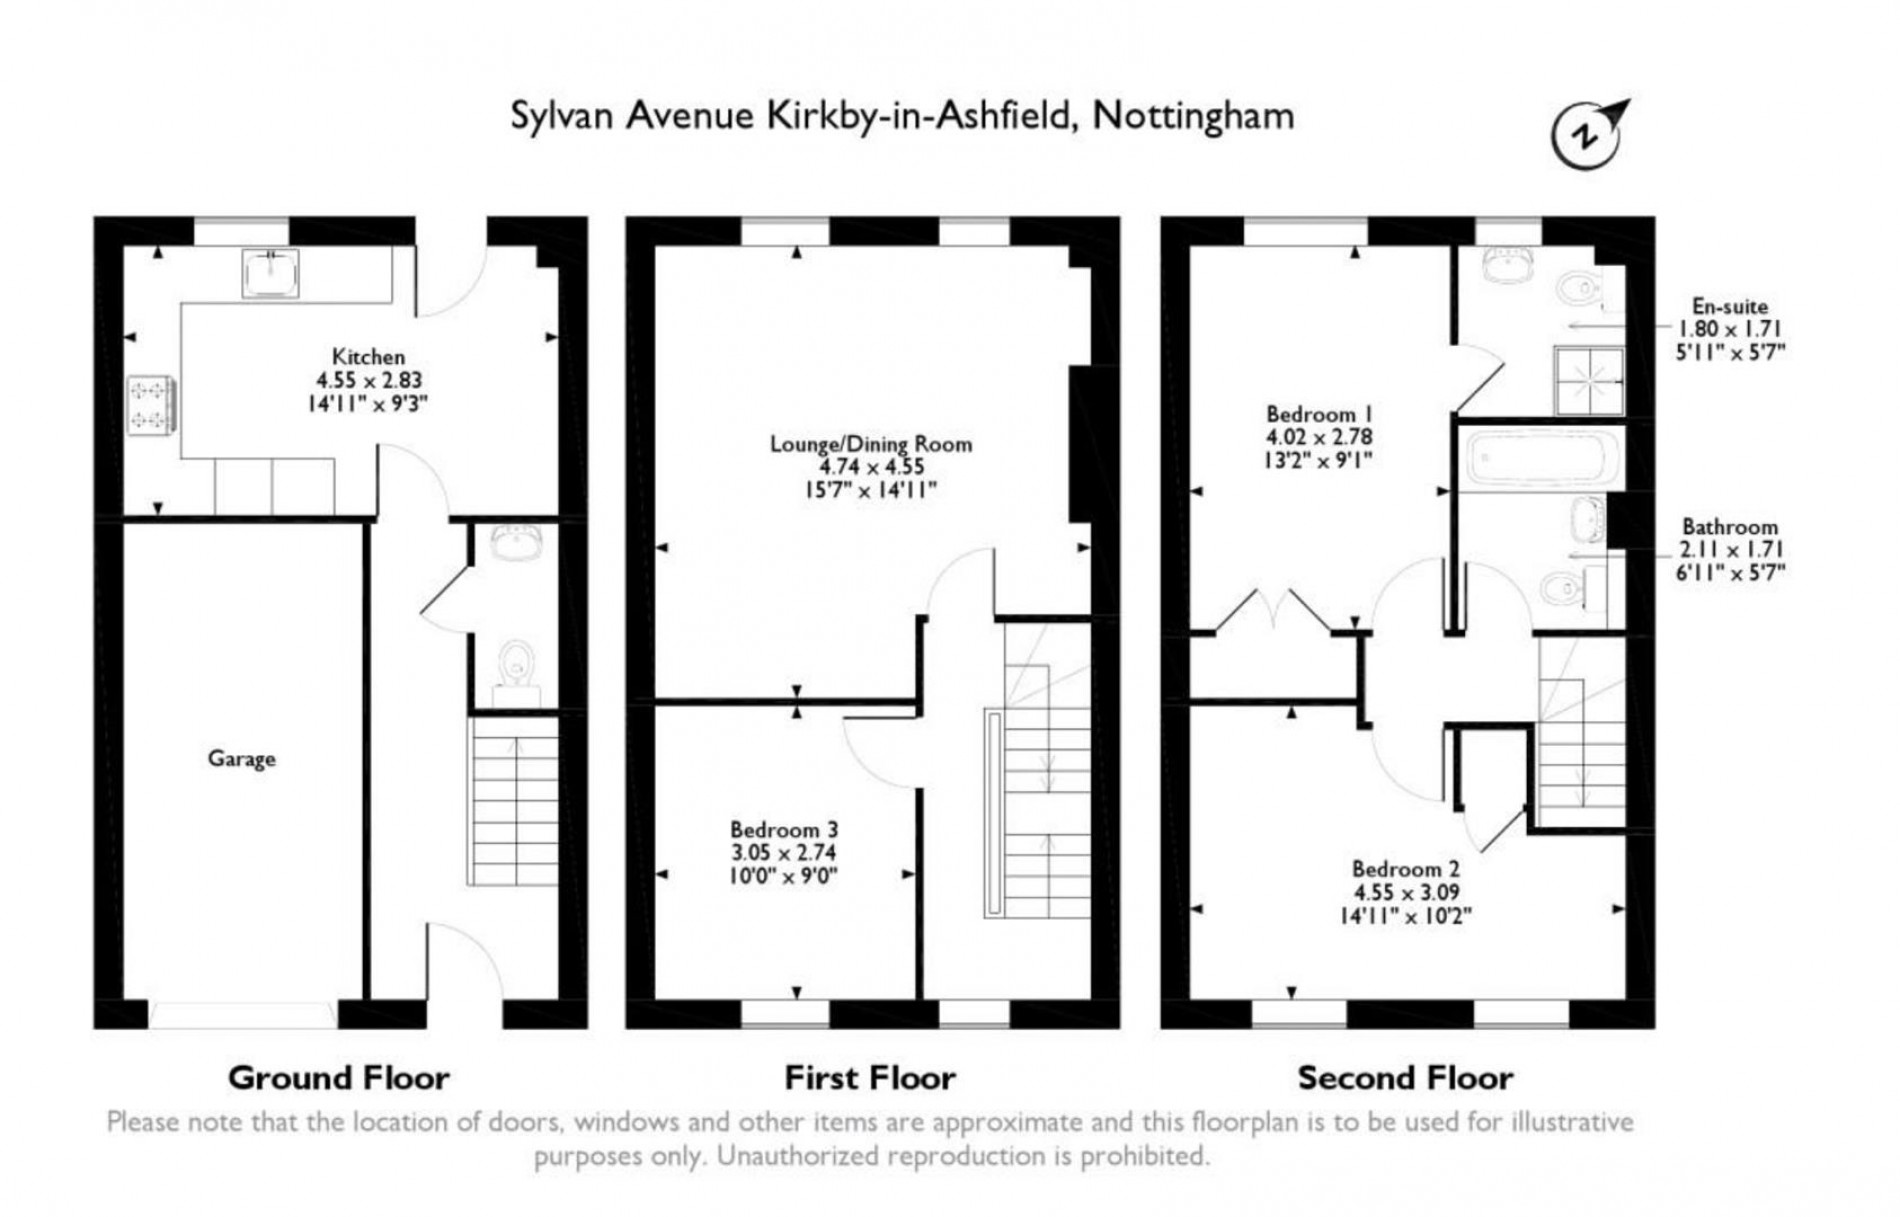 Floorplan for Sylvan Avenue, Kirkby-In-Ashfield, Nottingham